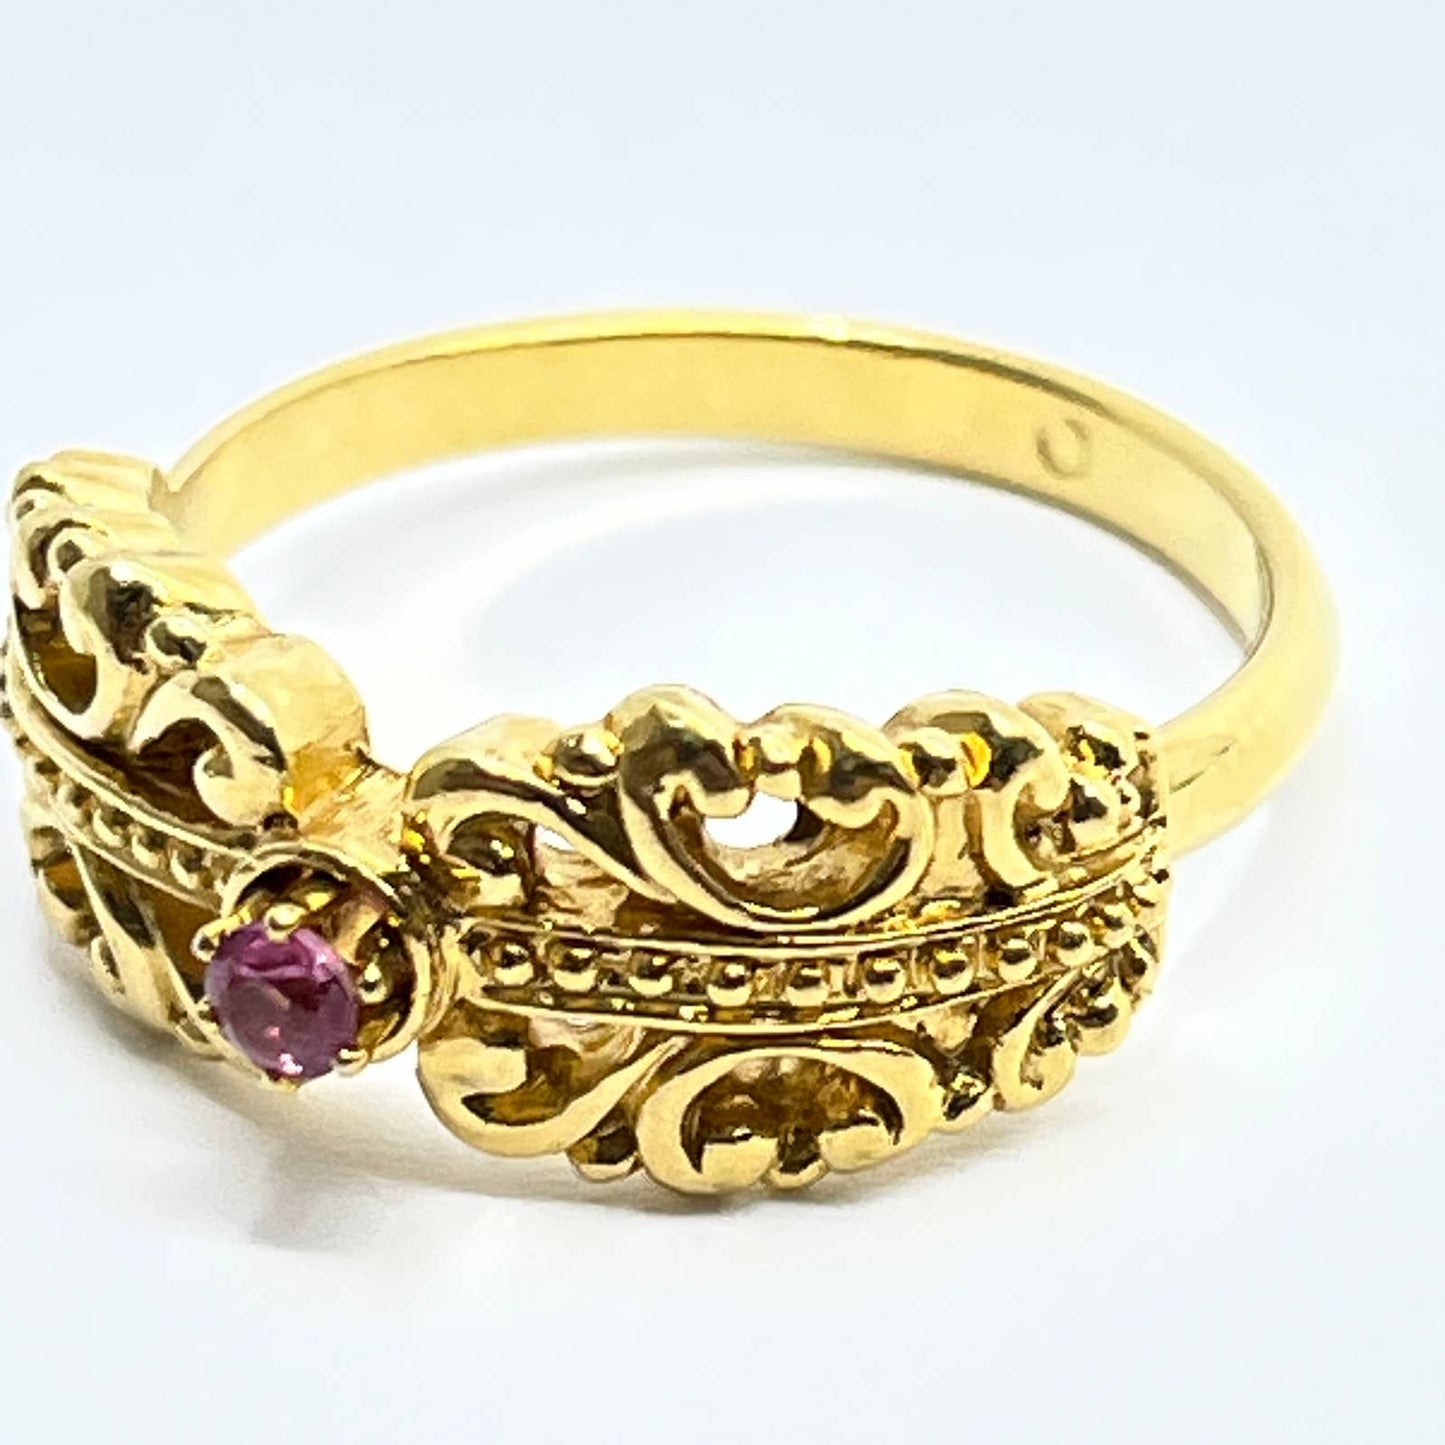 Victorian Edwardian Style Ladies Goldtone Pink Rhinestone Ring Size 8-9 SD5